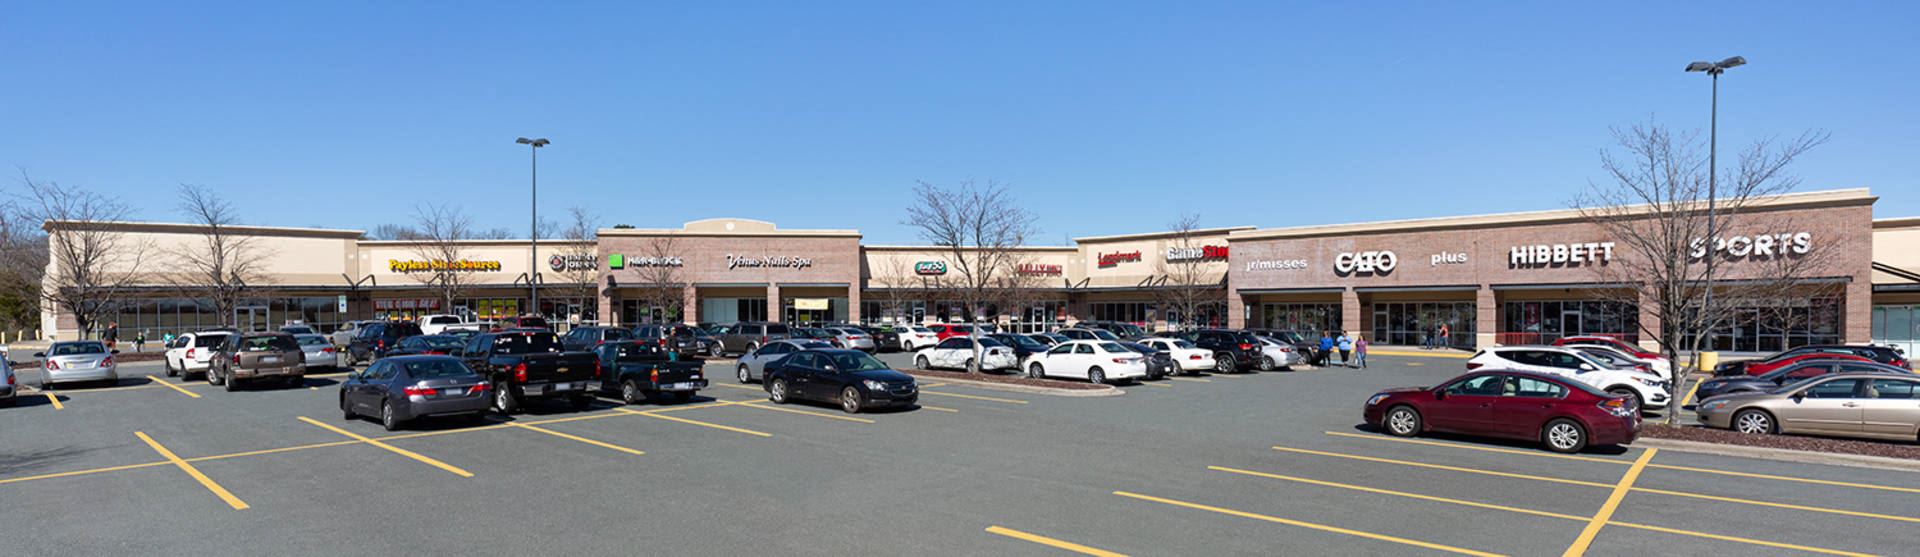 Oak Summit Shopping Center